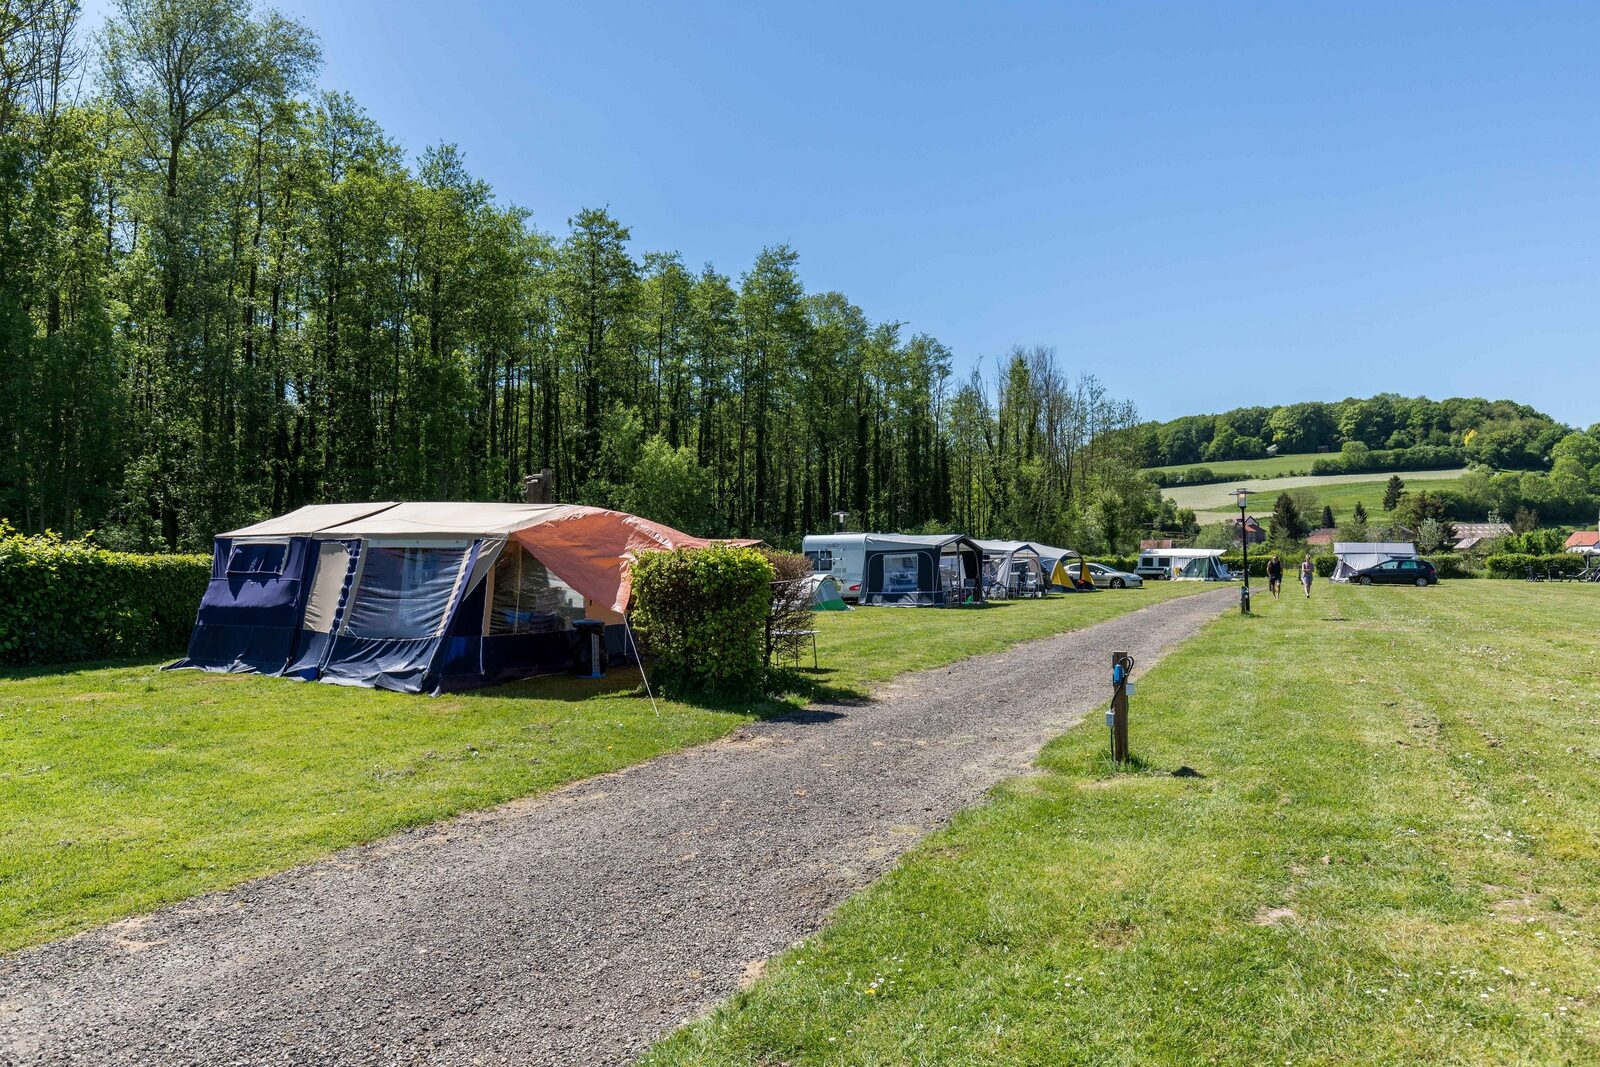 Bekijk alle campings in Nederland